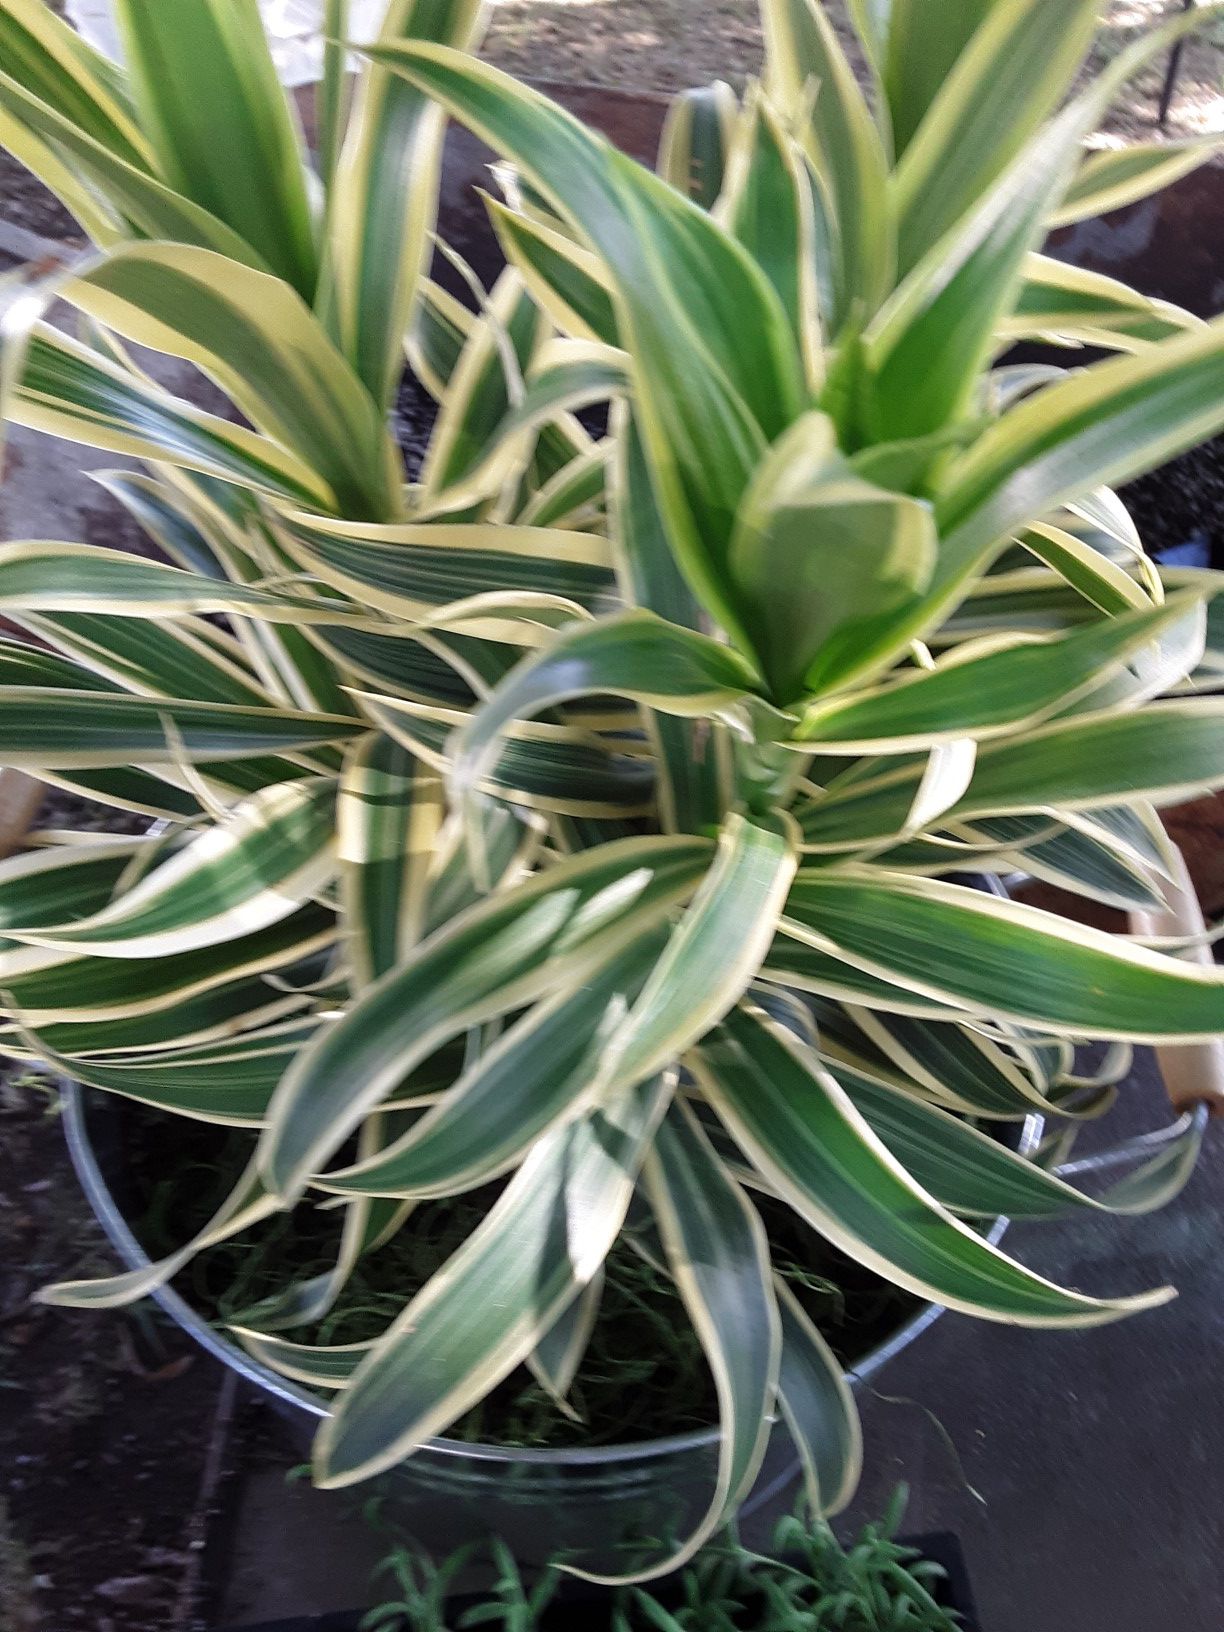 12" pot with indoor plant